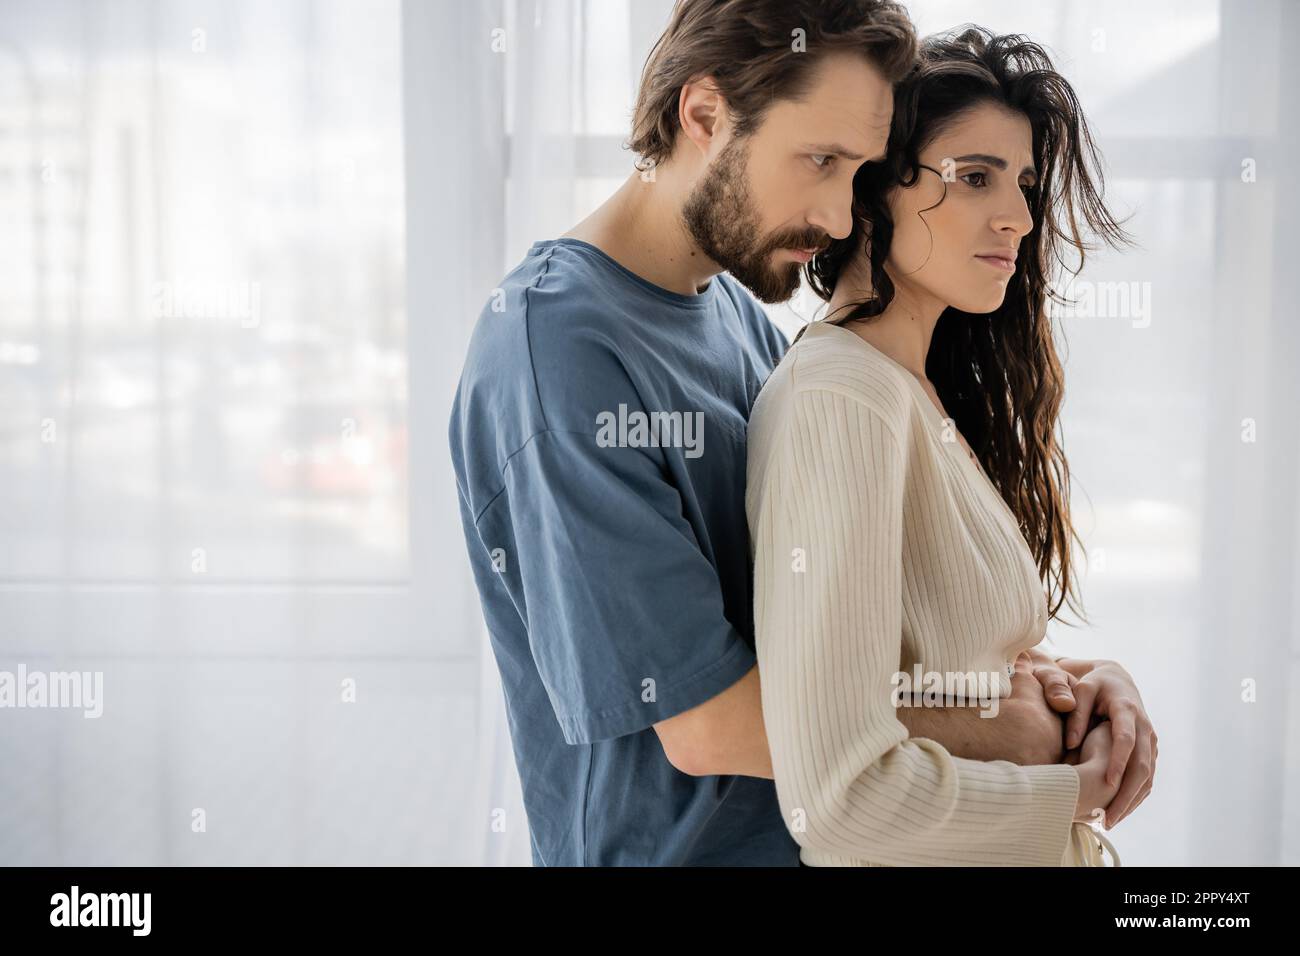 Caring bearded man embracing sad girlfriend at home,stock image Stock Photo